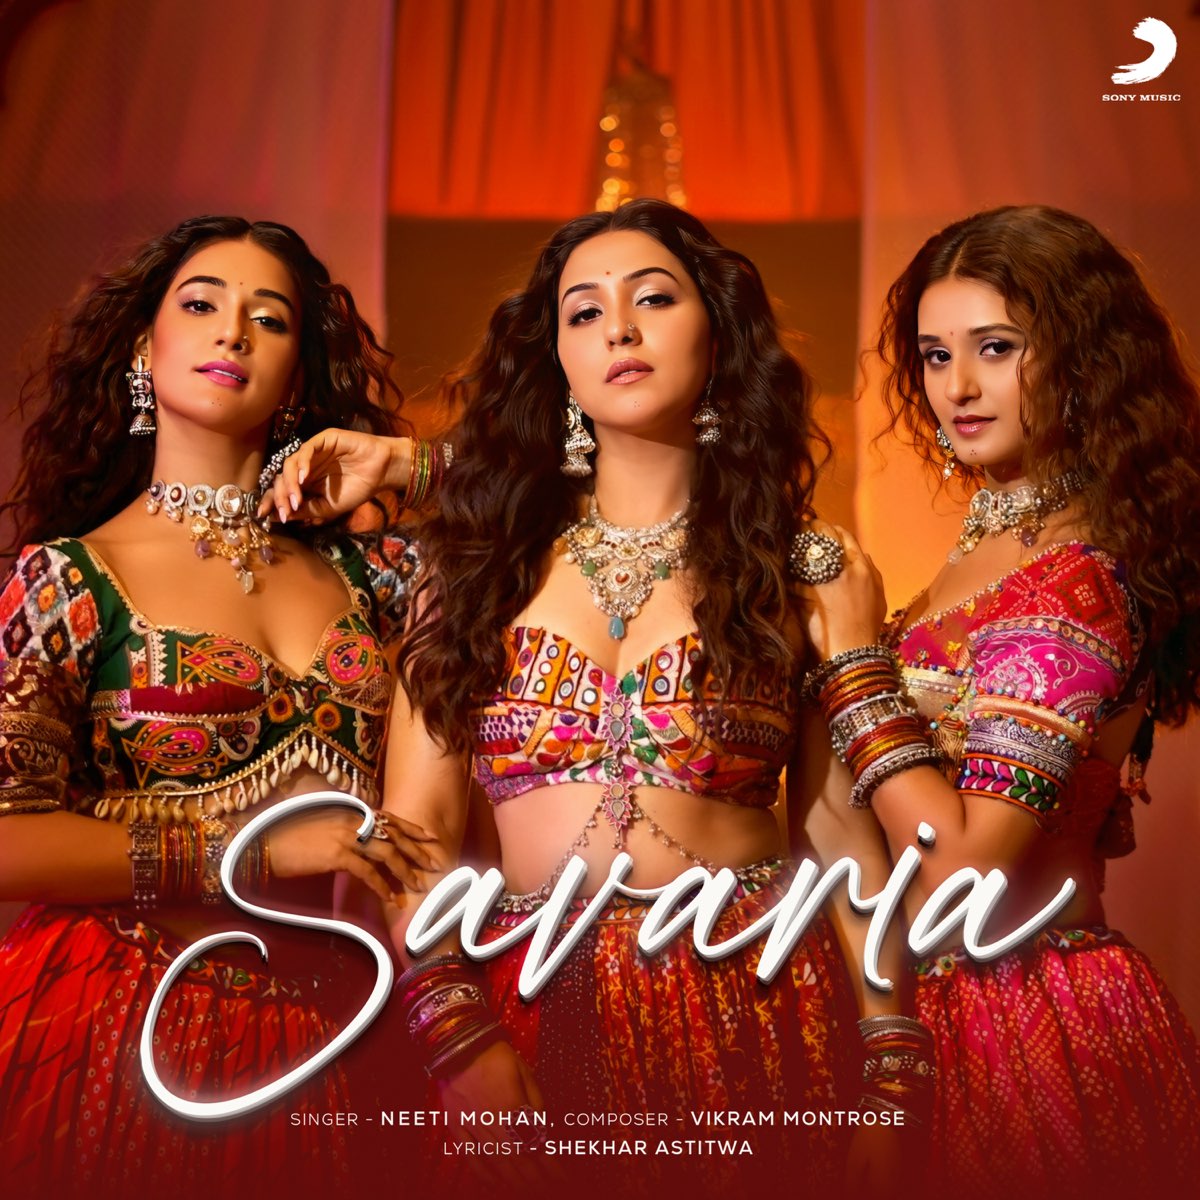 ‎Savaria - Single - Album by Neeti Mohan & Vikram Montrose - Apple Music